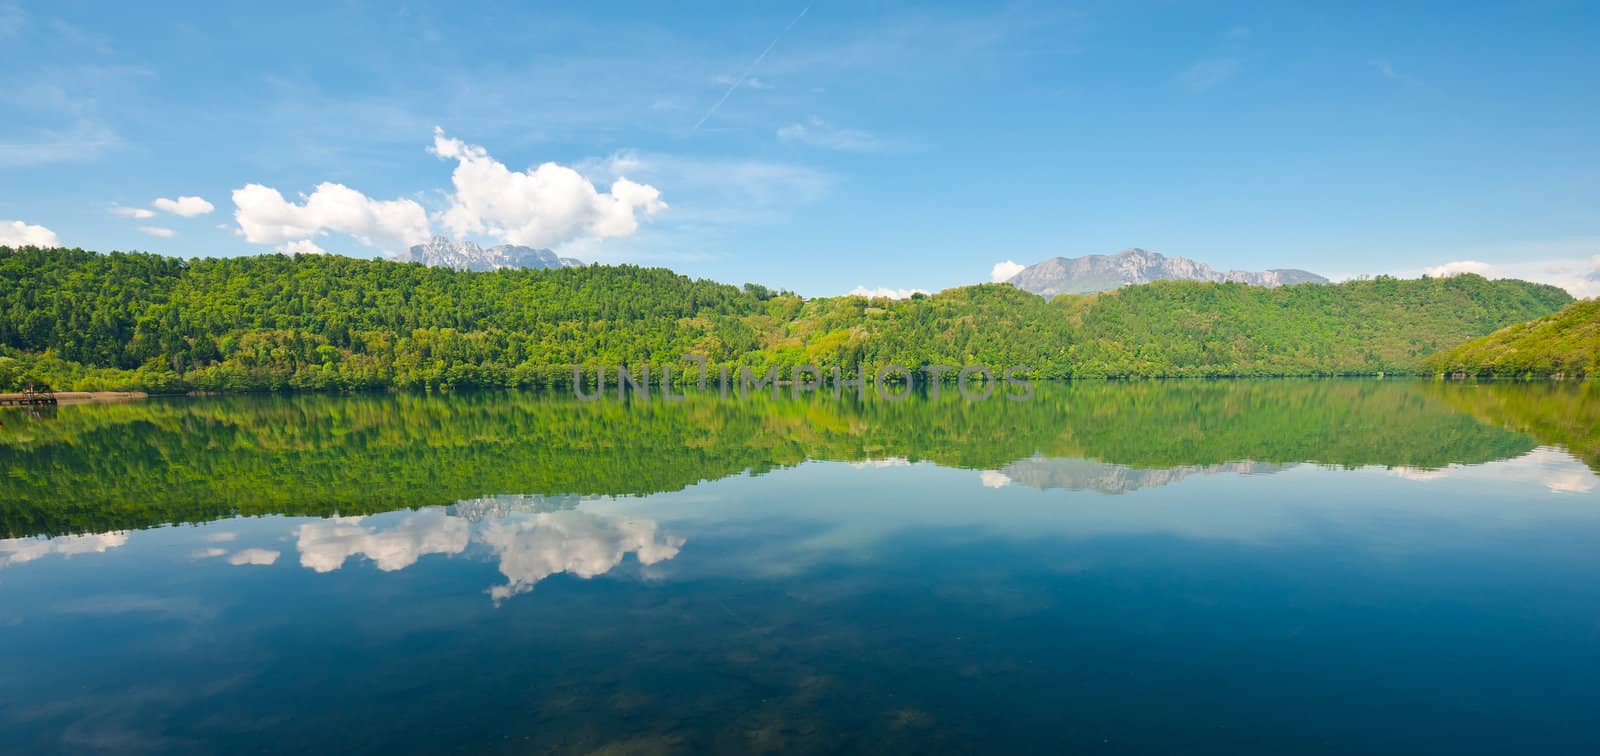 Lake Lago di levico in the Dolomites